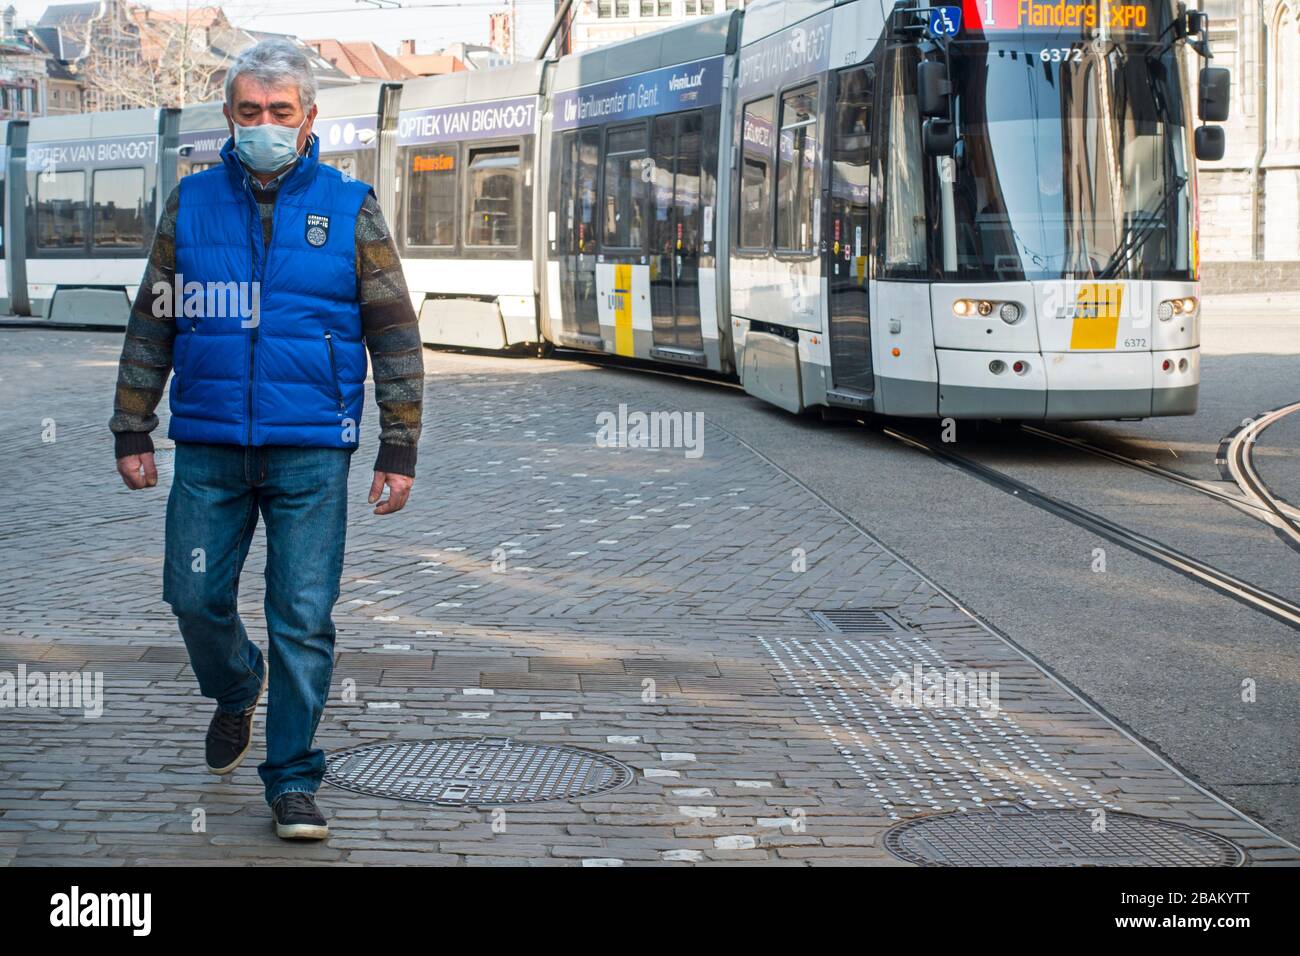 Tram and man wearing medical face mask due to 2020 COVID-19 / coronavirus / corona virus pandemic while walking in the Flemish city Ghent, Belgium Stock Photo